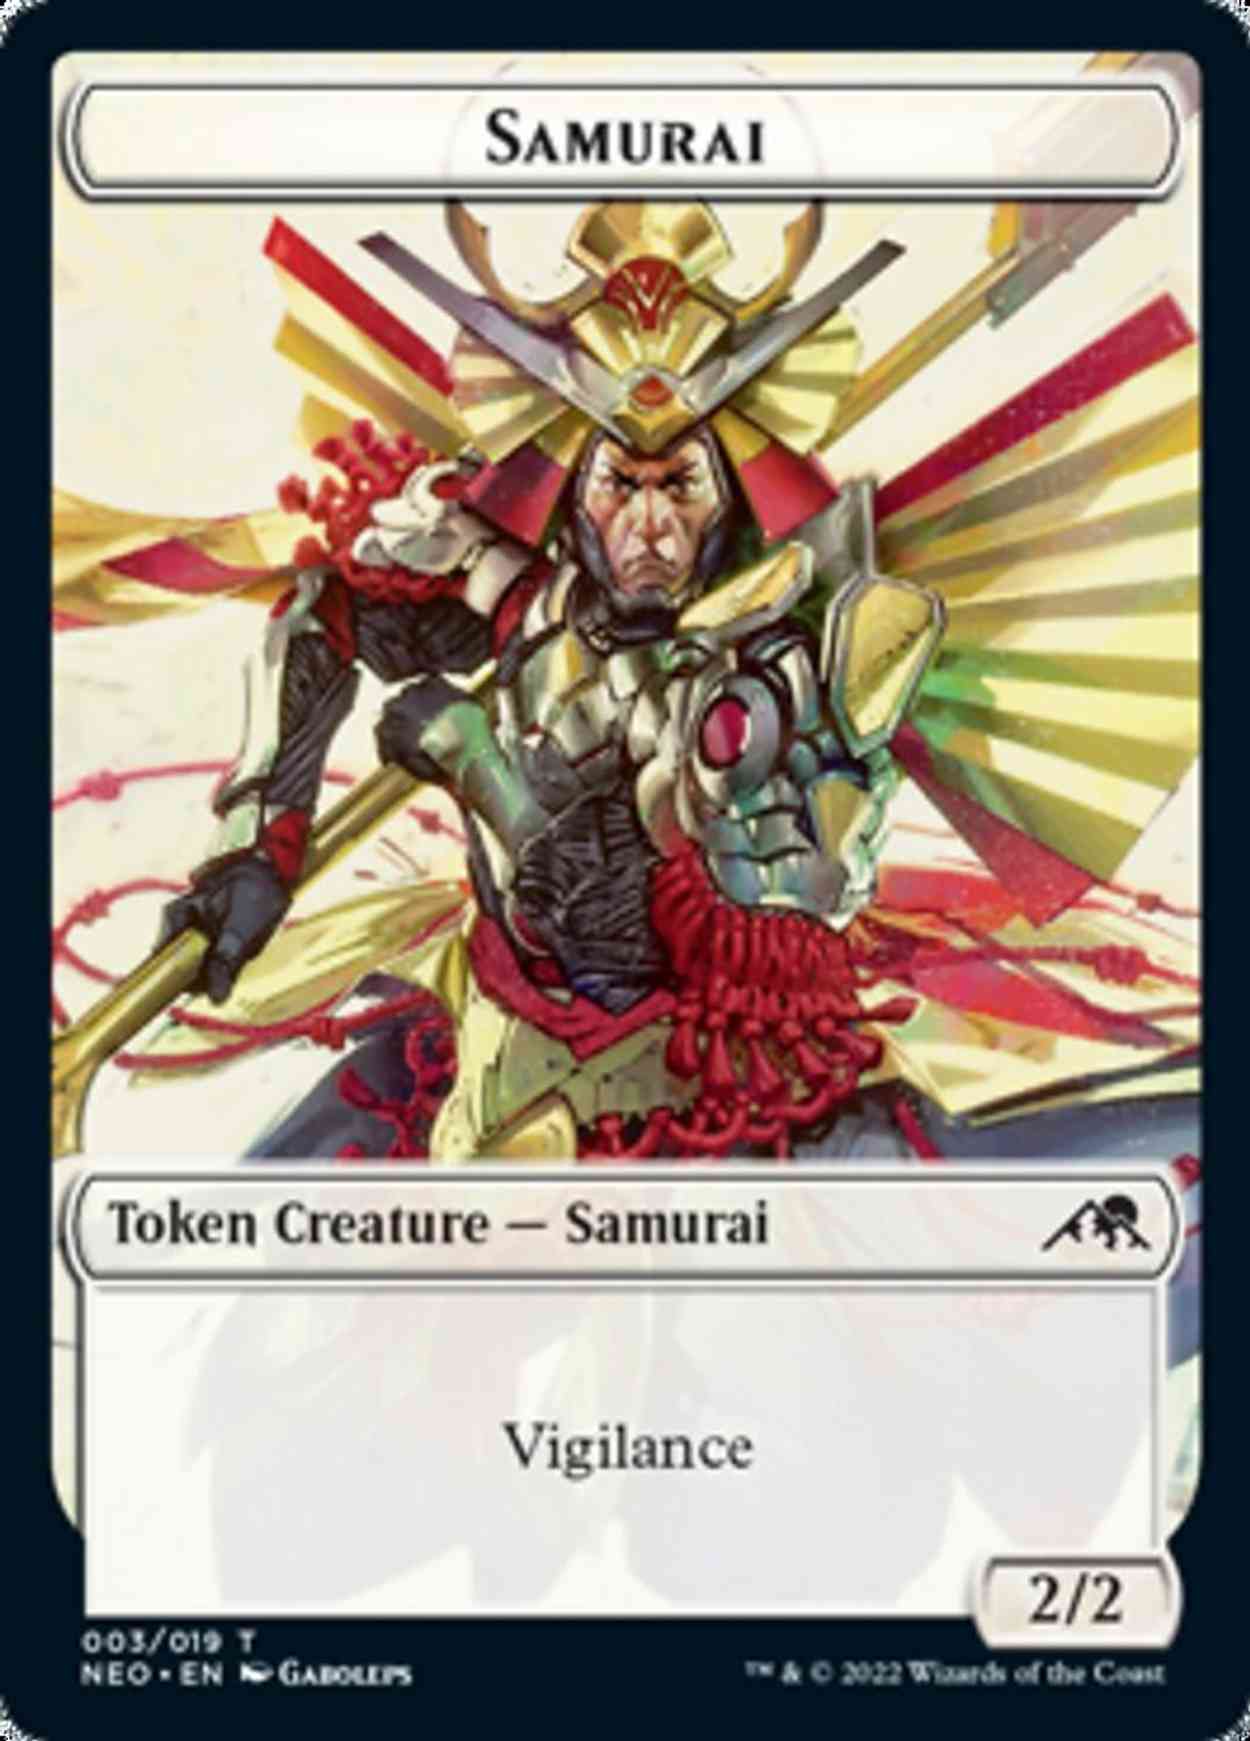 Samurai (003) // Human Monk (010) Double-sided Token magic card front